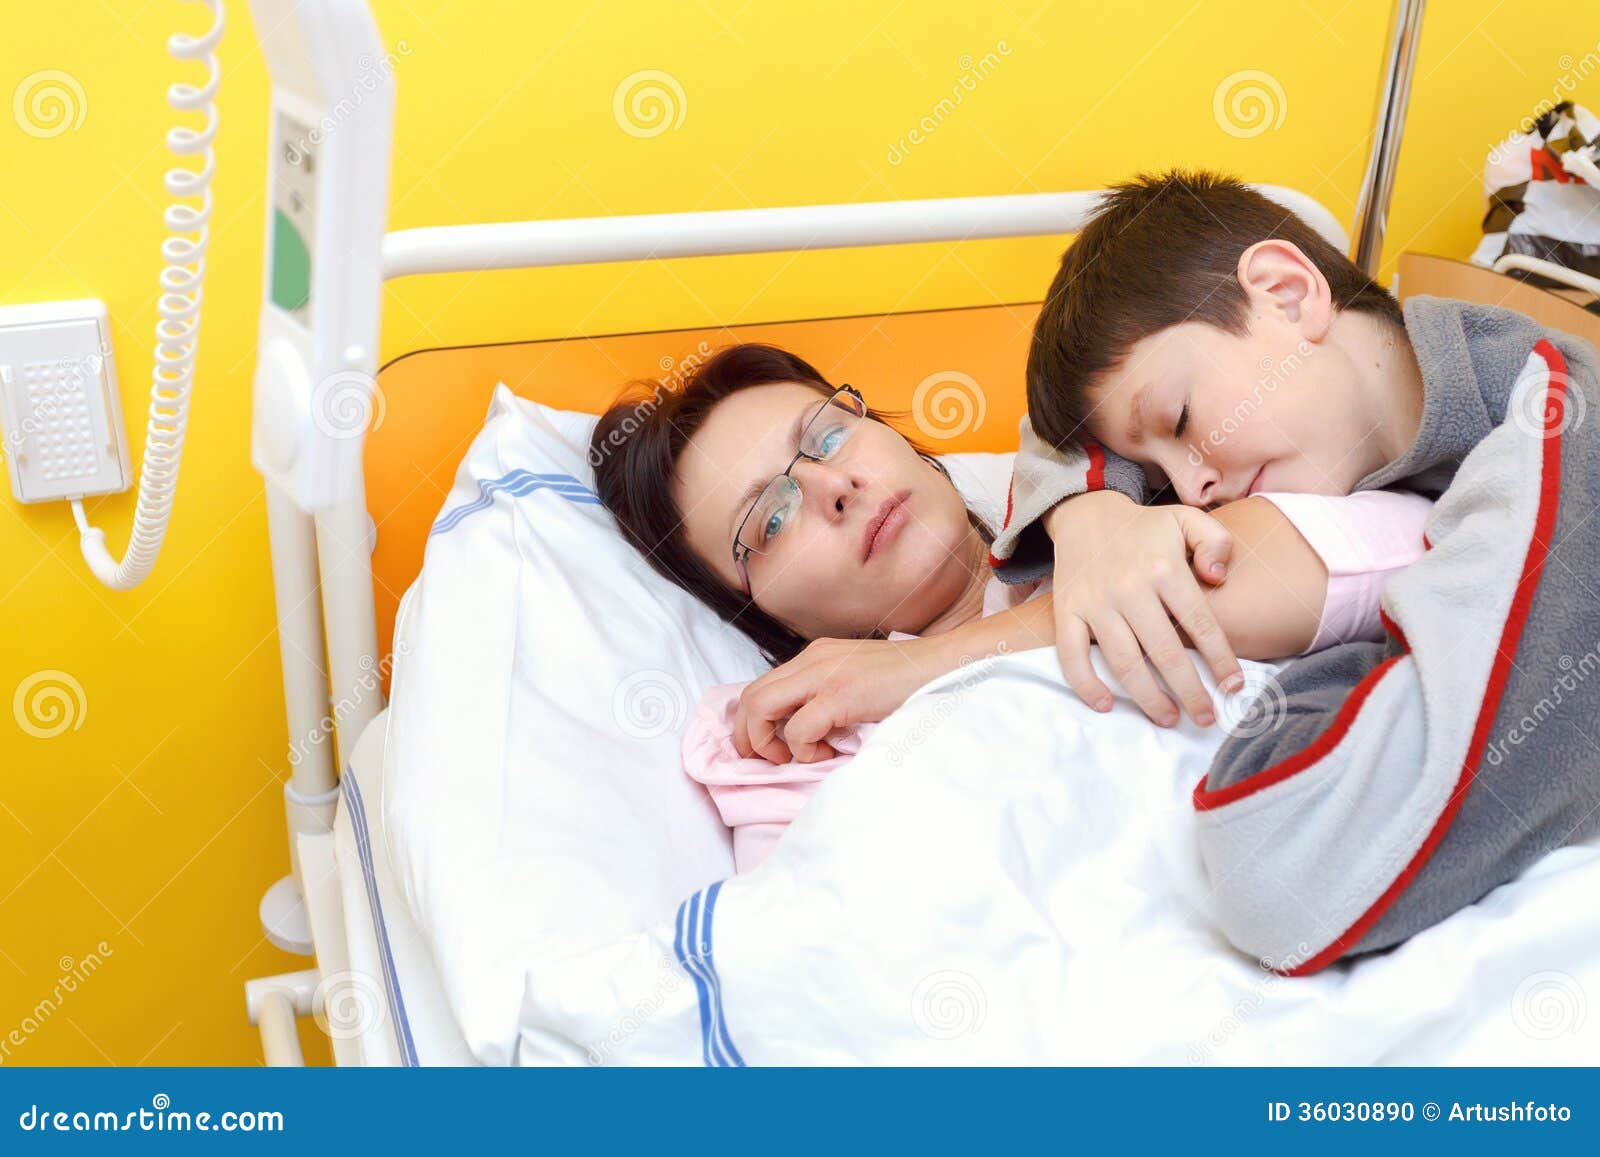 Ребенка навещаю в больнице. Мама с ребенком в больнице.